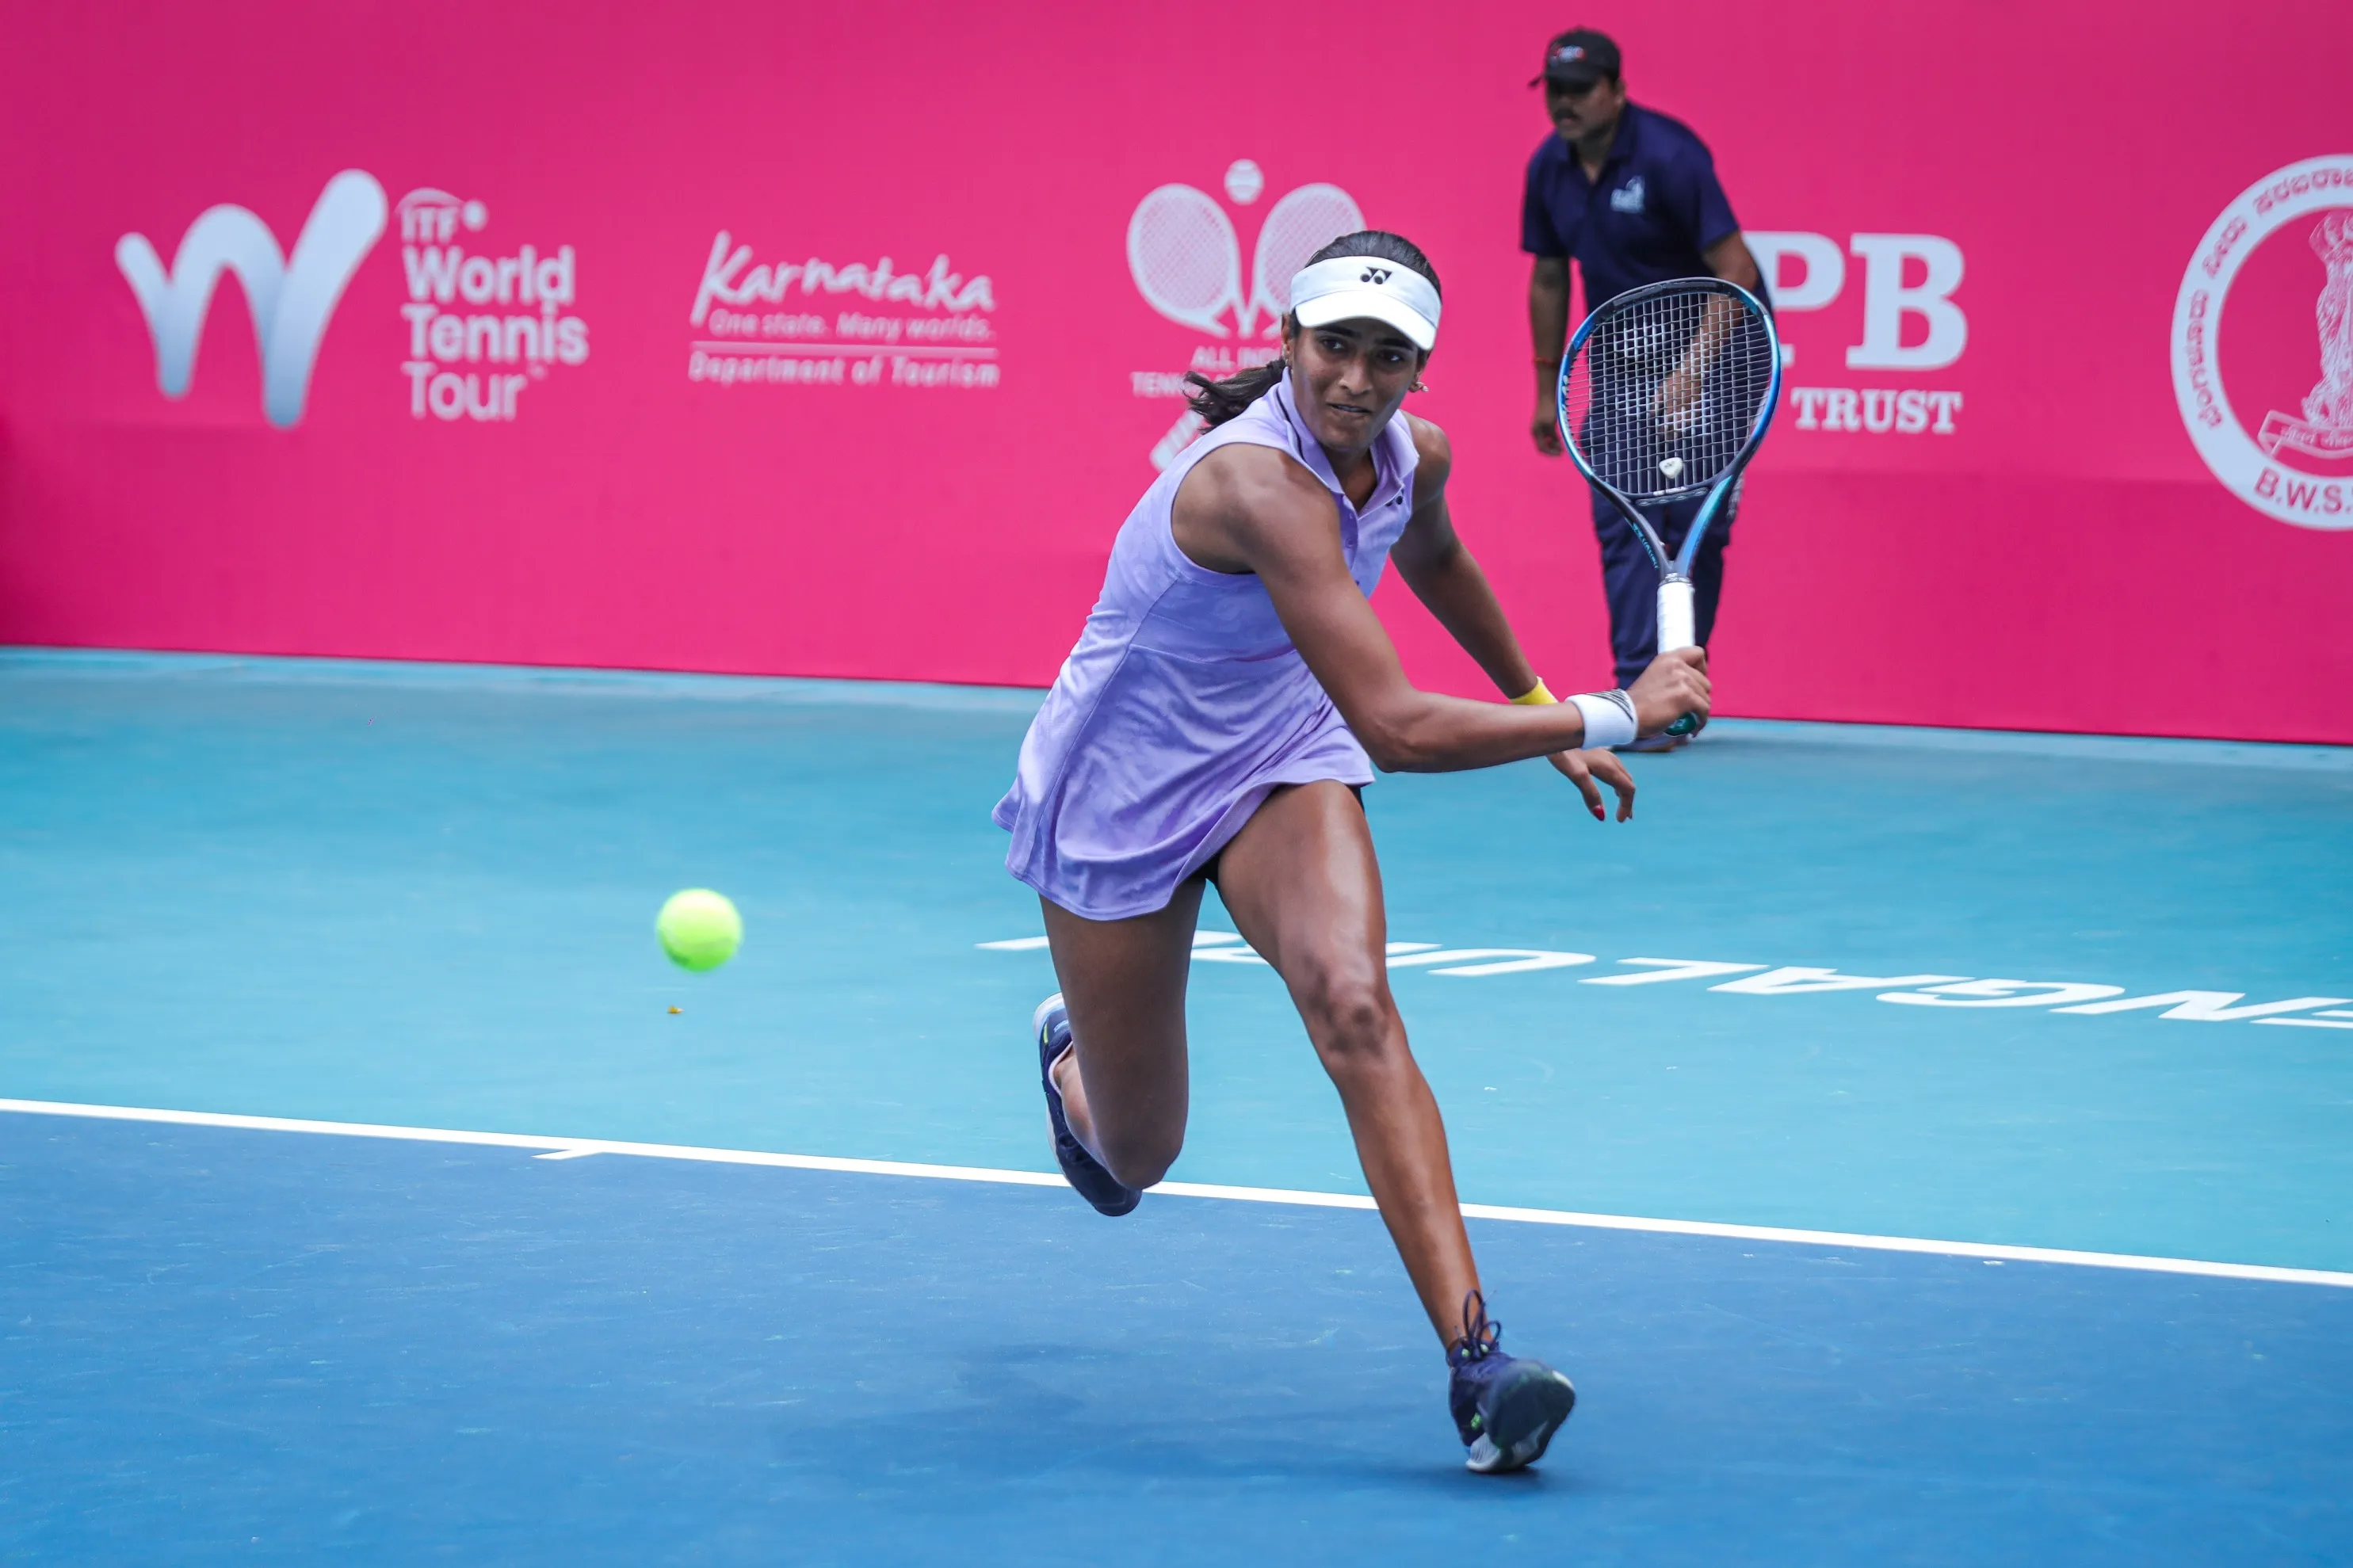 KPB Trust ITF Women’s Open | Ankita Raina and Rutuja Bhosale advance to singles quarters